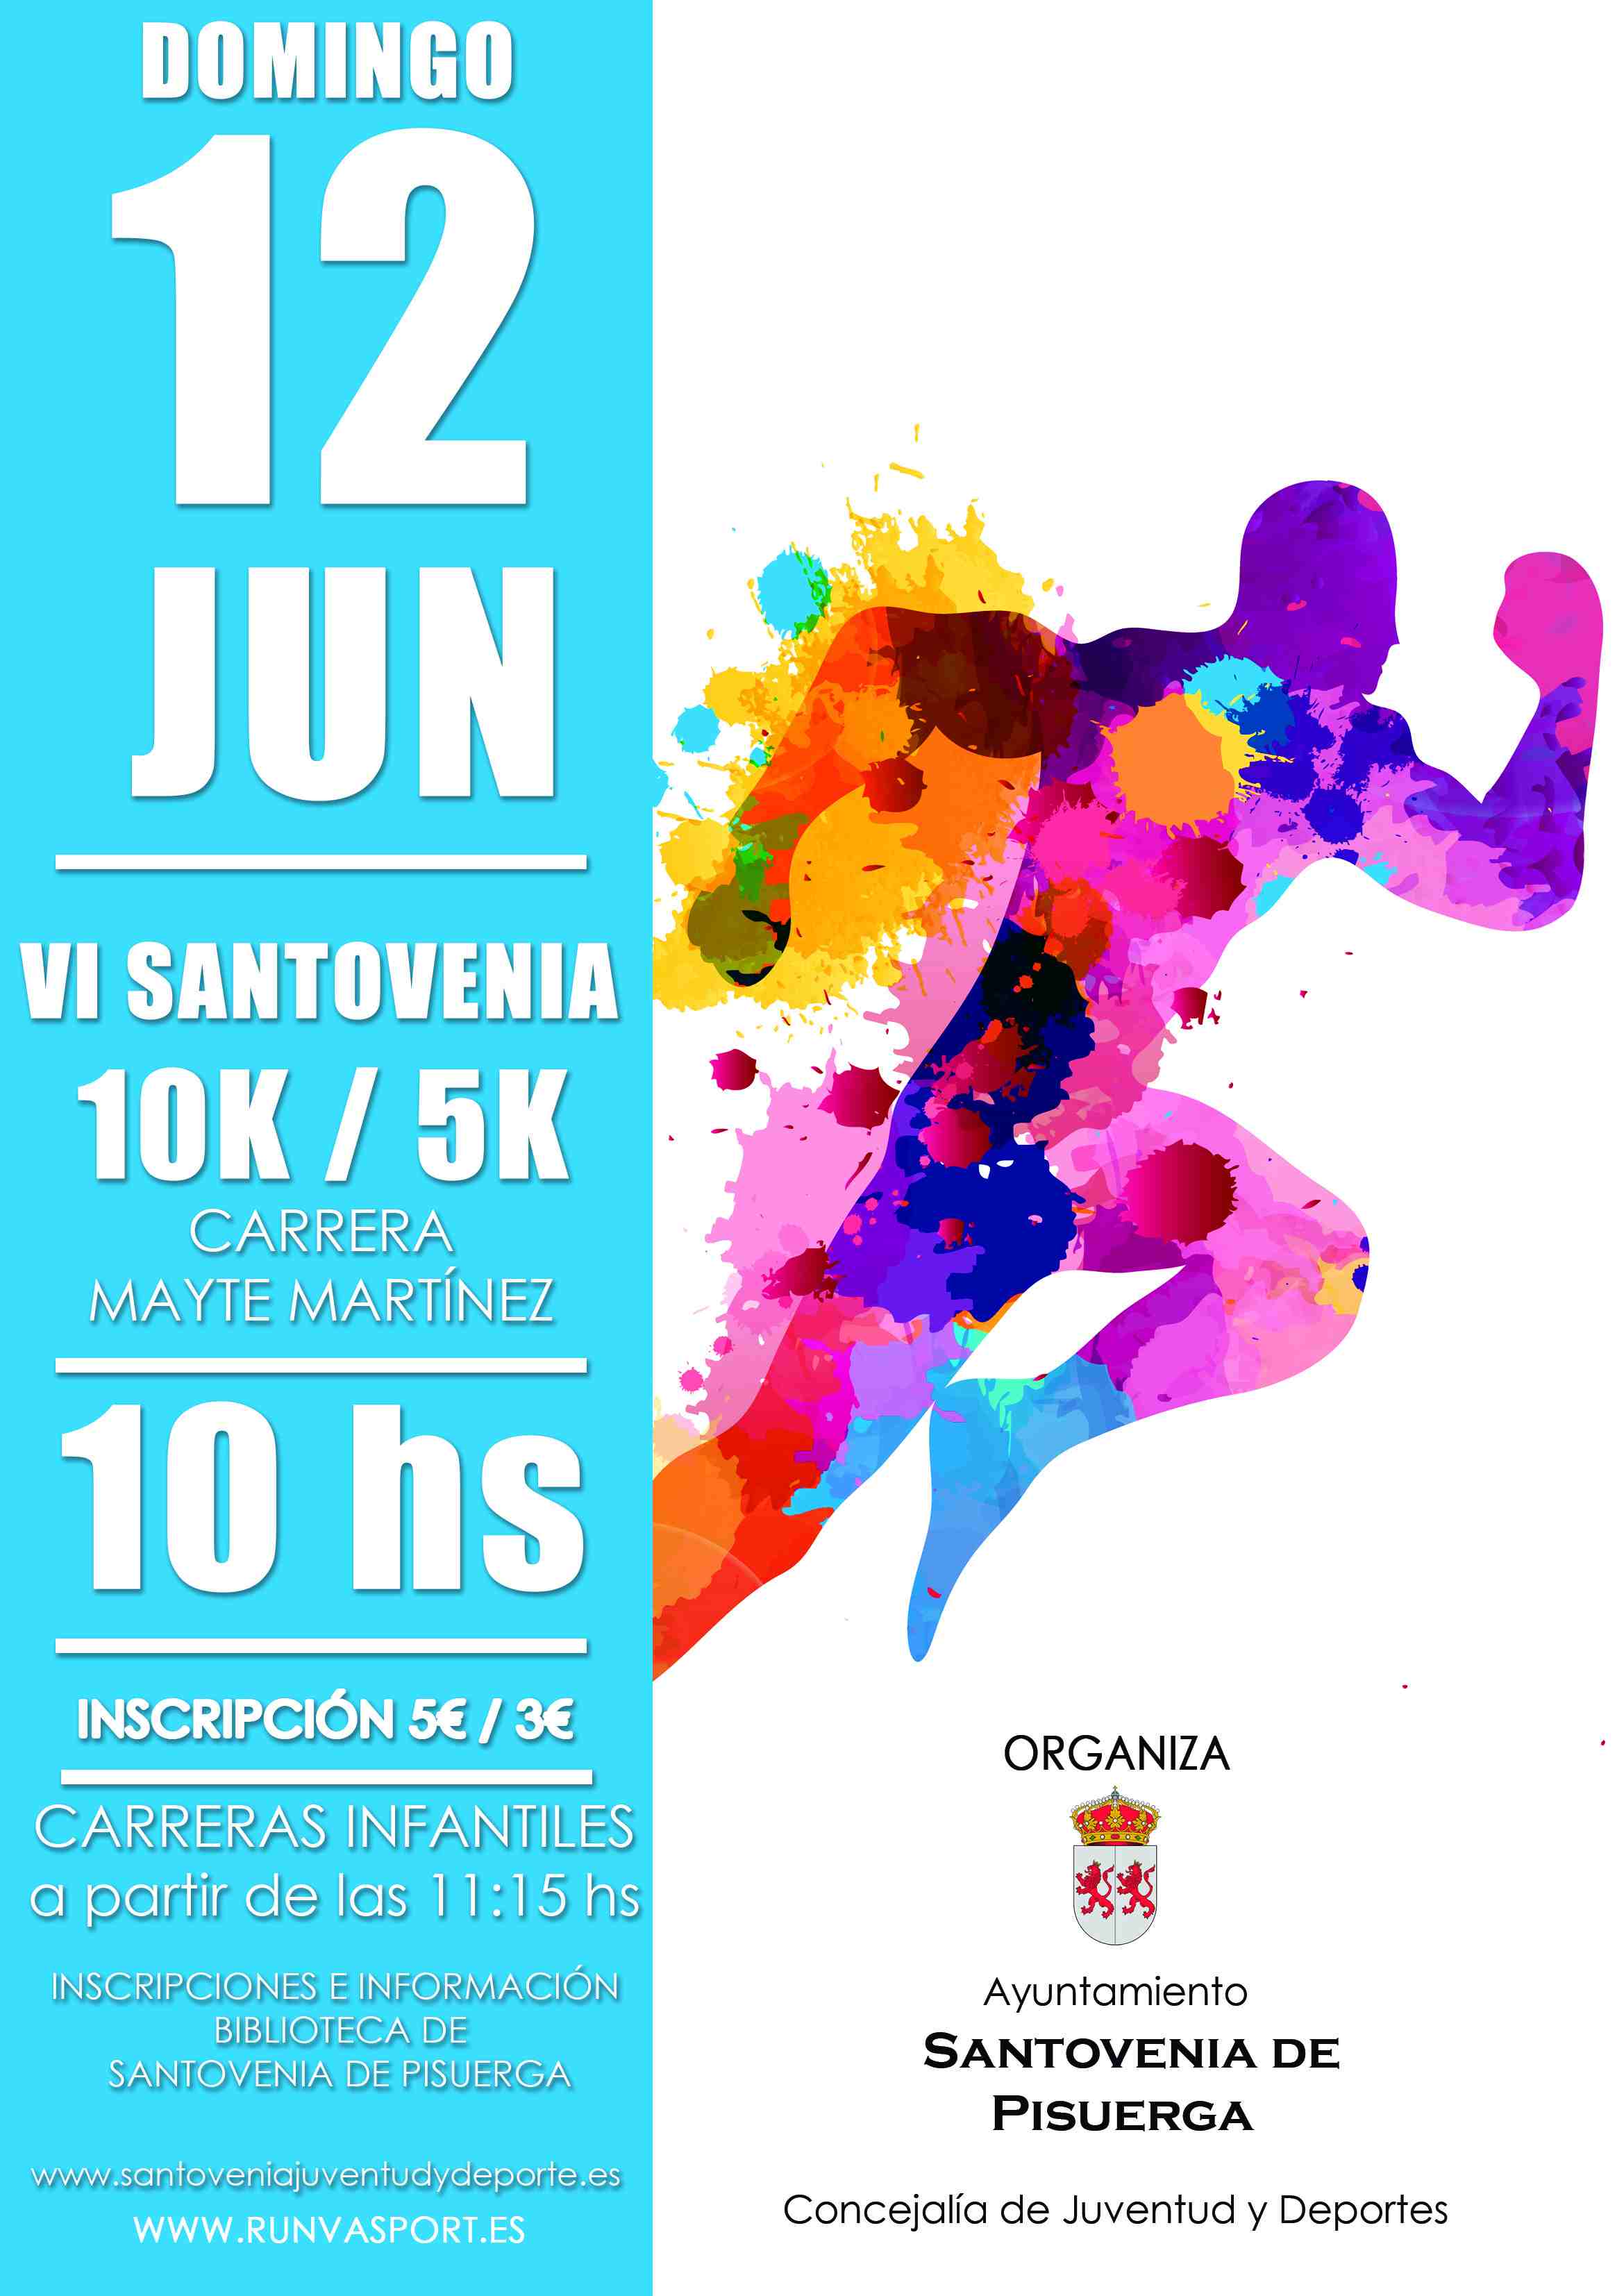 Event Poster VI SANTOVENIA 10K/5K CARRERA MAYTE MARTINEZ